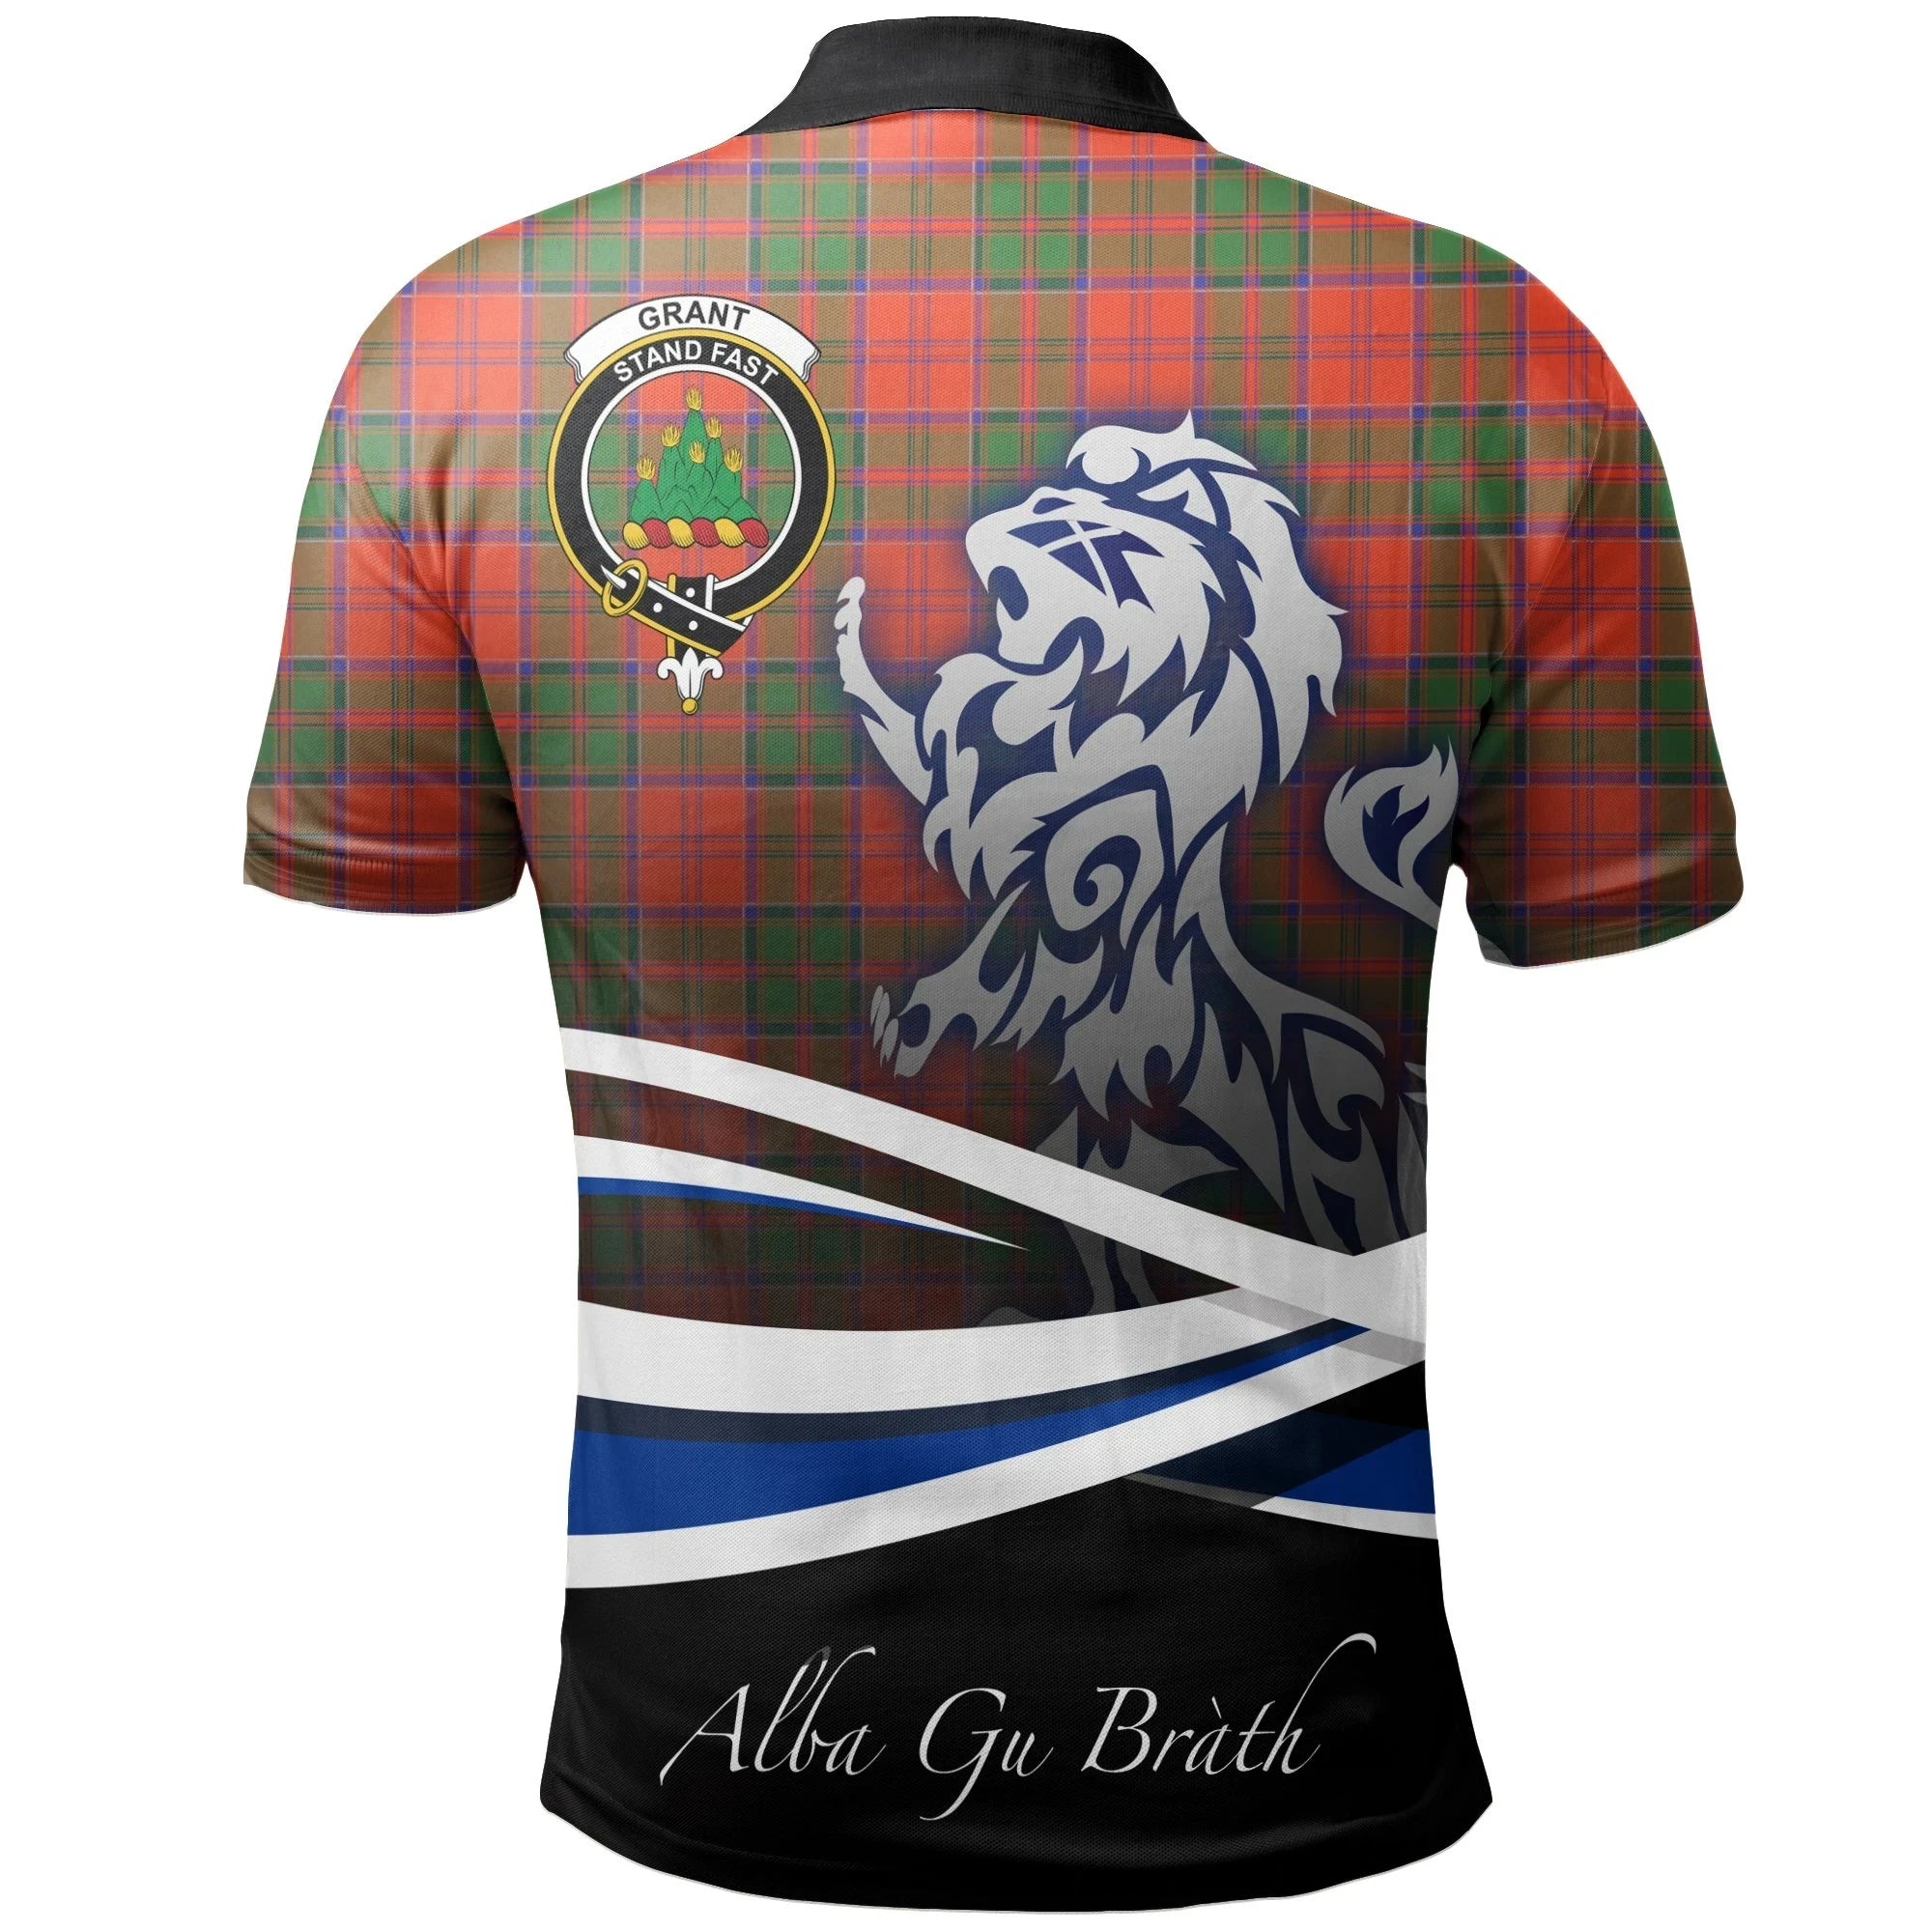 Grant Ancient Clan Polo Shirt, Scottish Tartan Grant Ancient Clans Polo Shirt Crest Lion Style